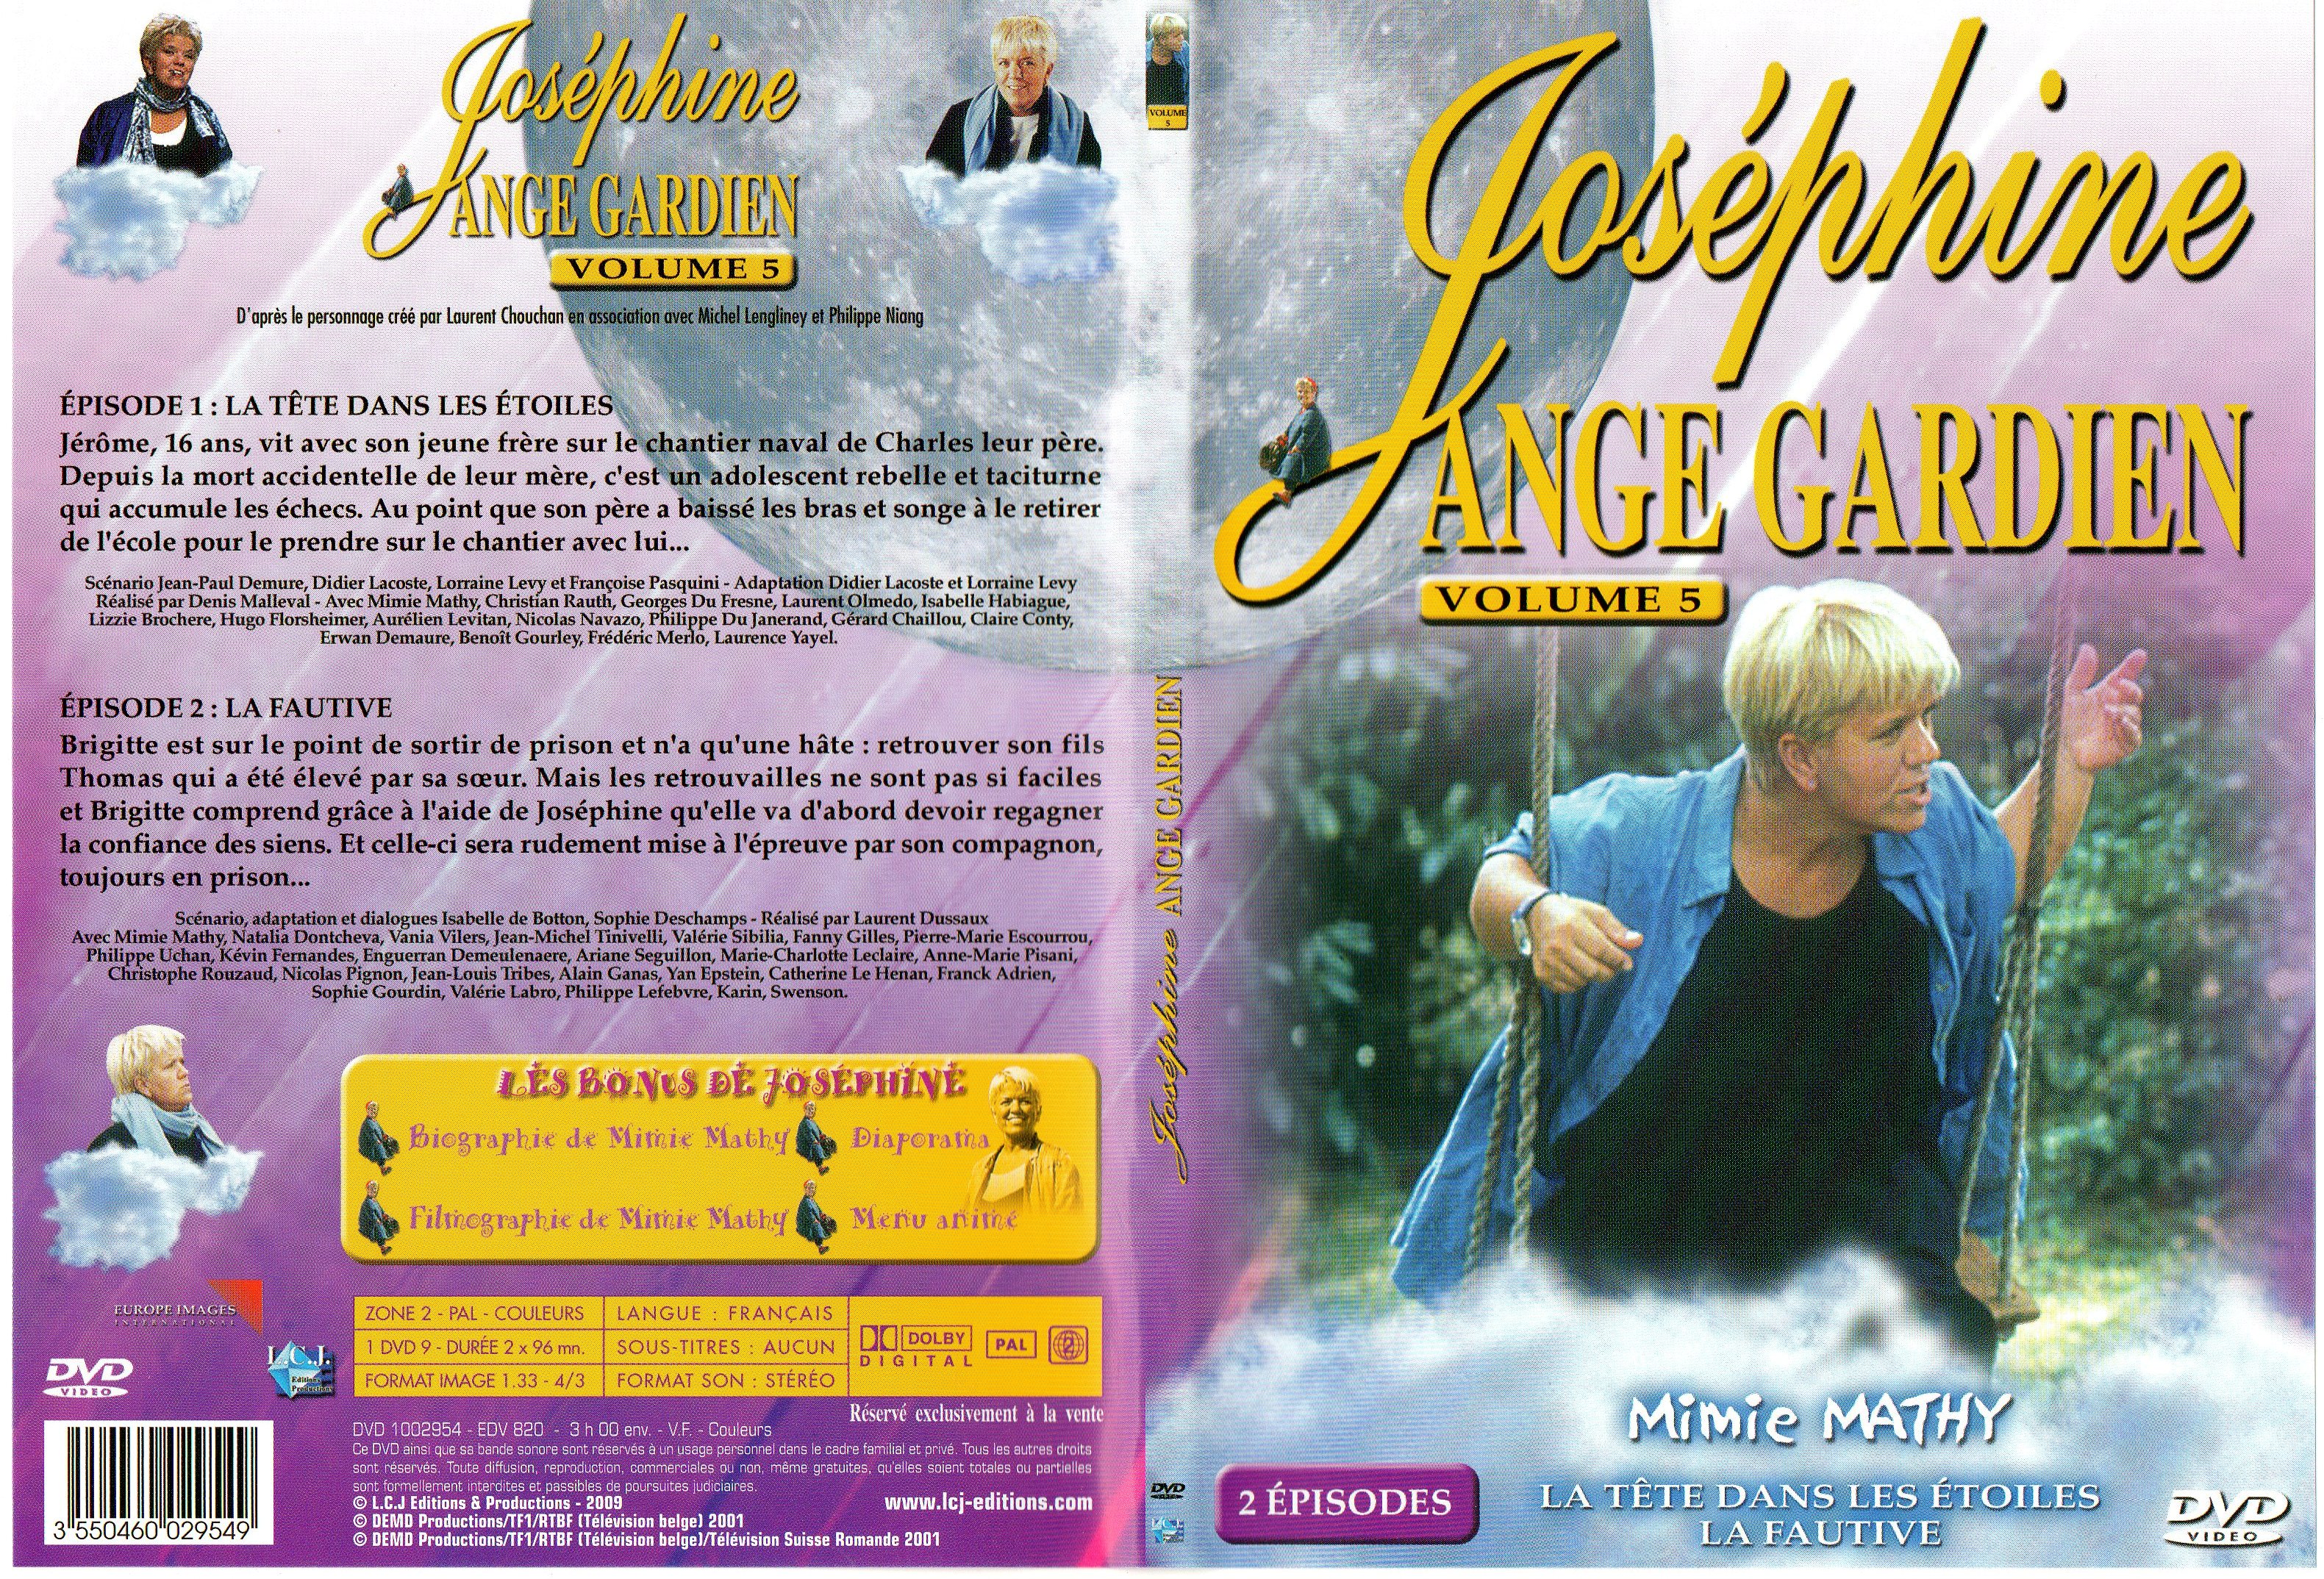 Jaquette DVD Josphine Ange Gardien saison 1 DVD 5